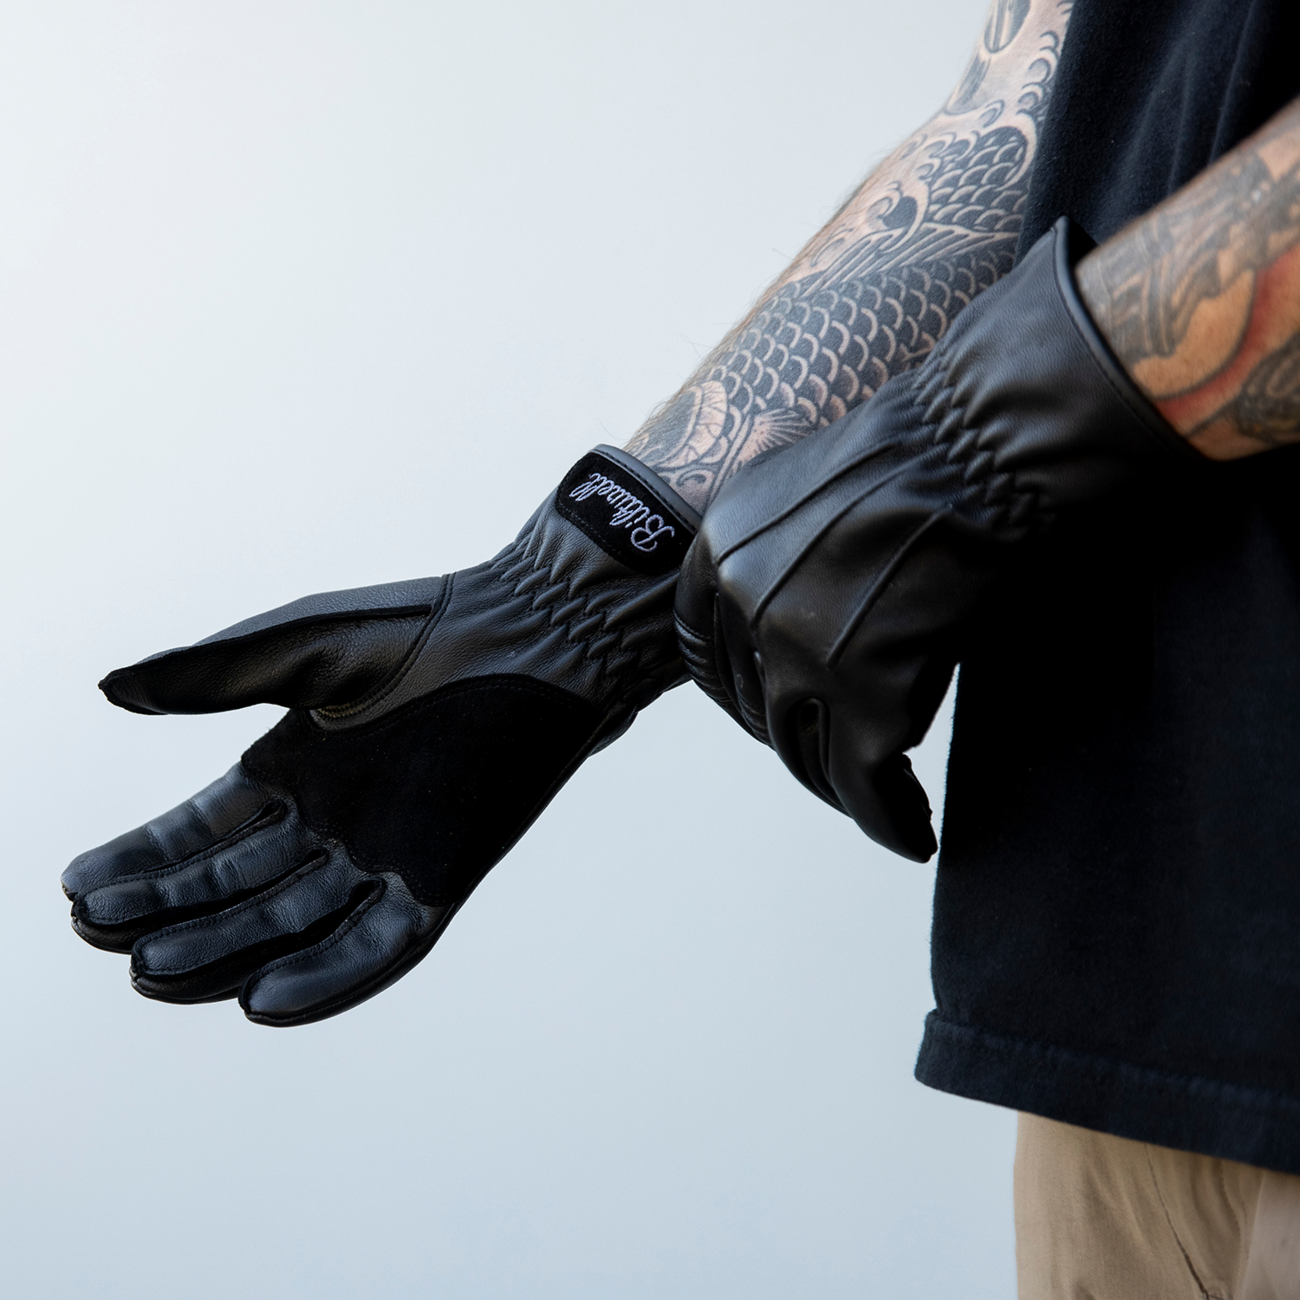 BILTWELL Work 2.0 Gloves - Black - Large 1510-0101-004